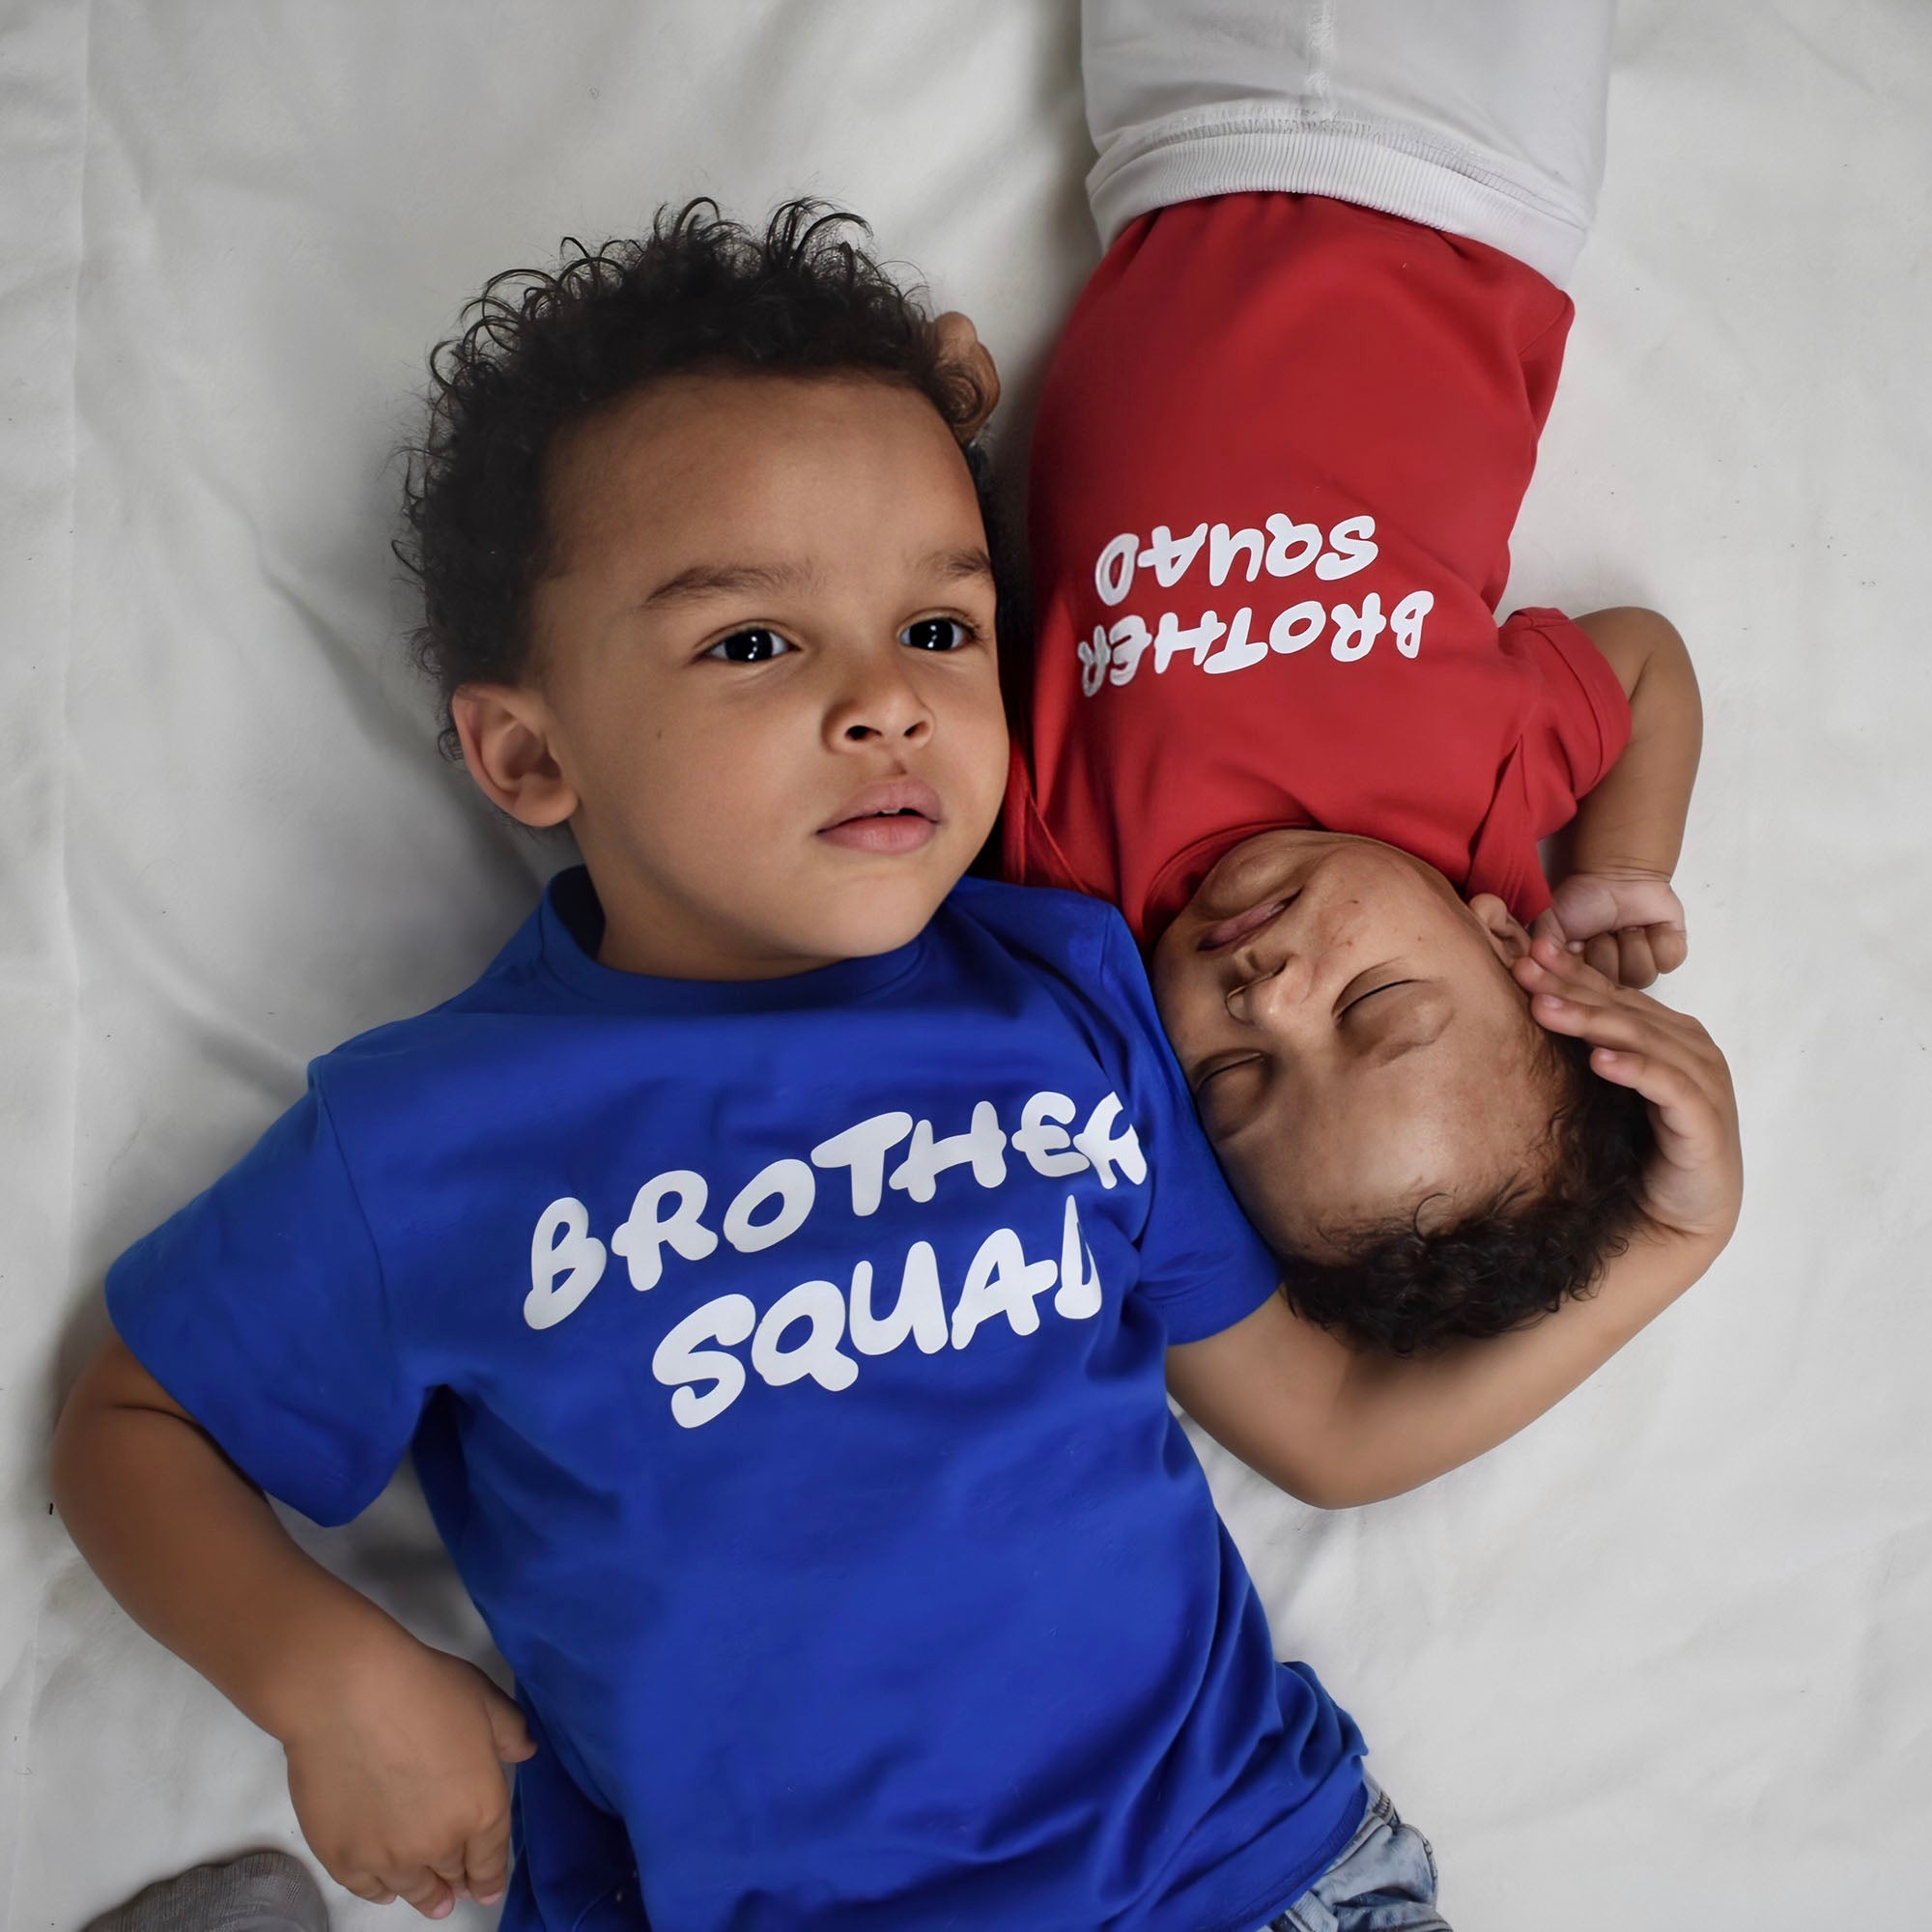 'Brother squad' kids shortsleeve shirt